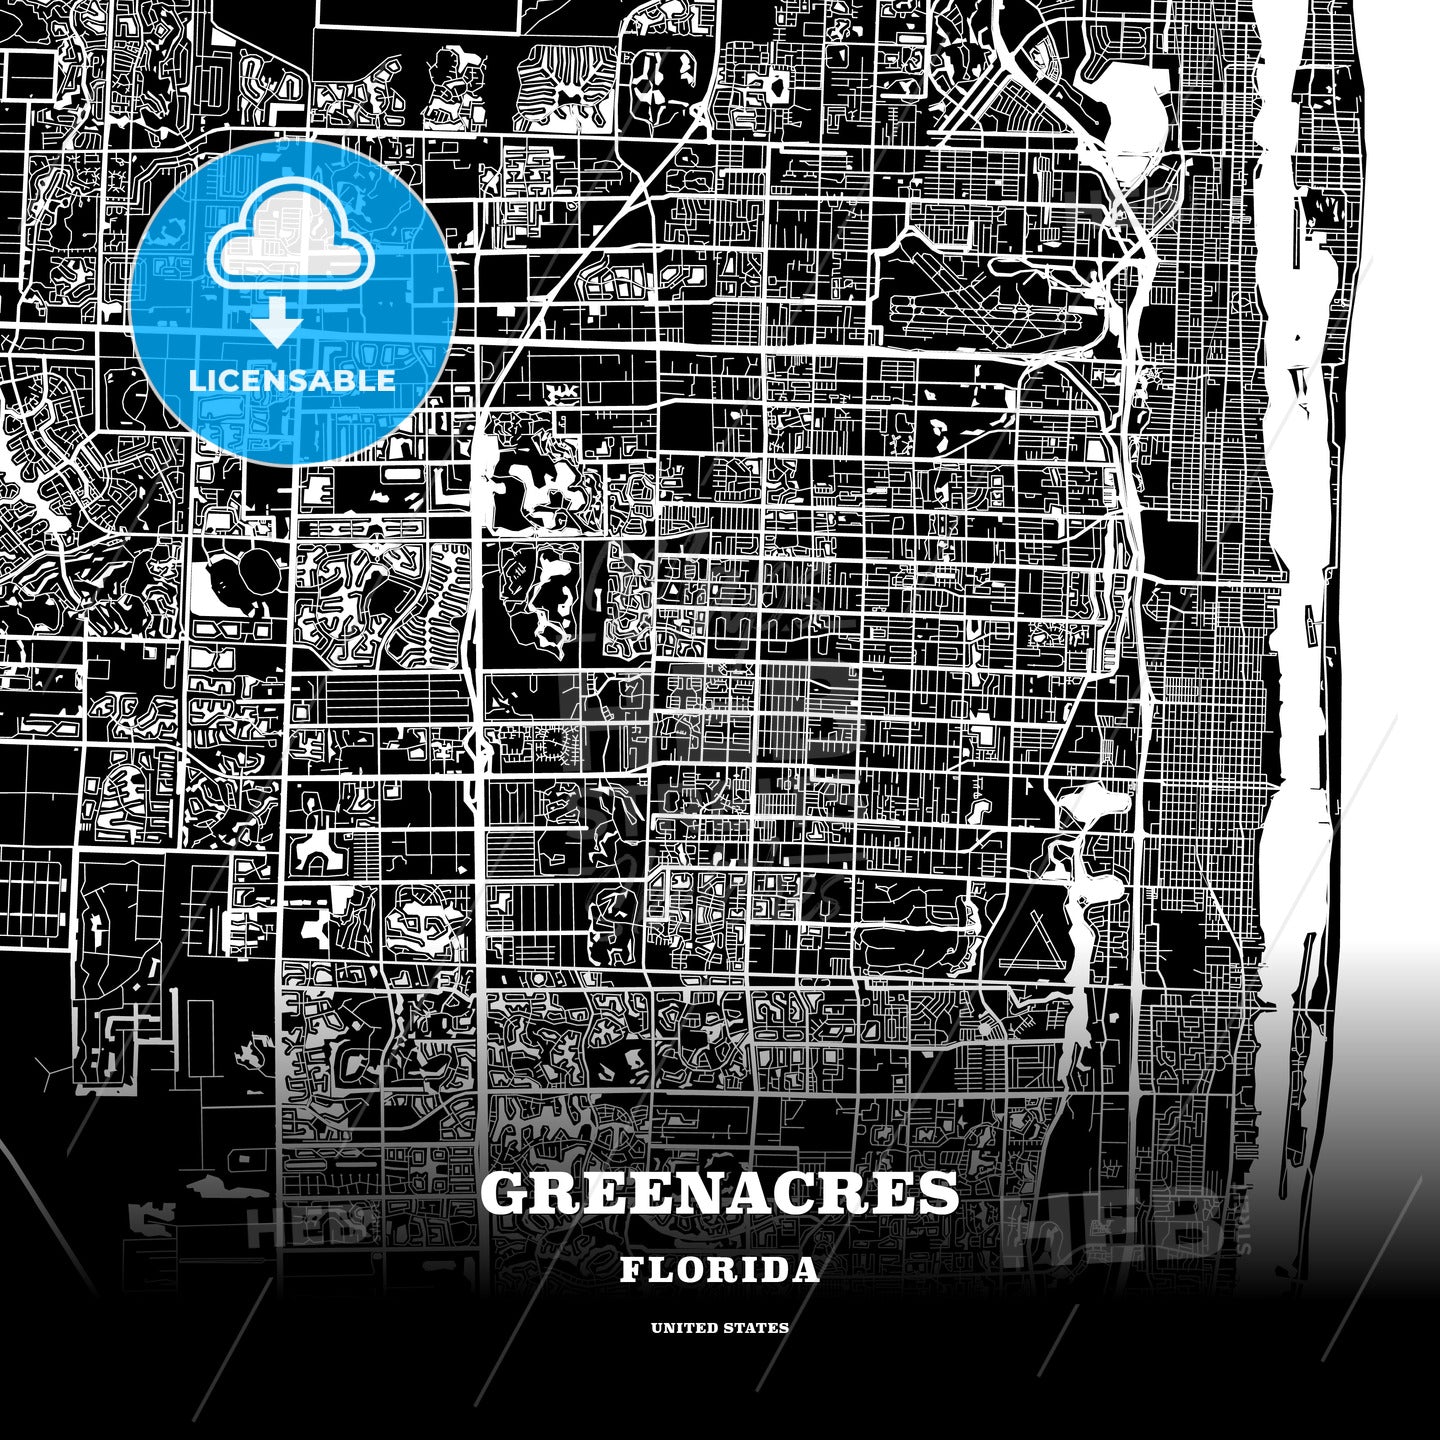 Greenacres, Florida, USA map